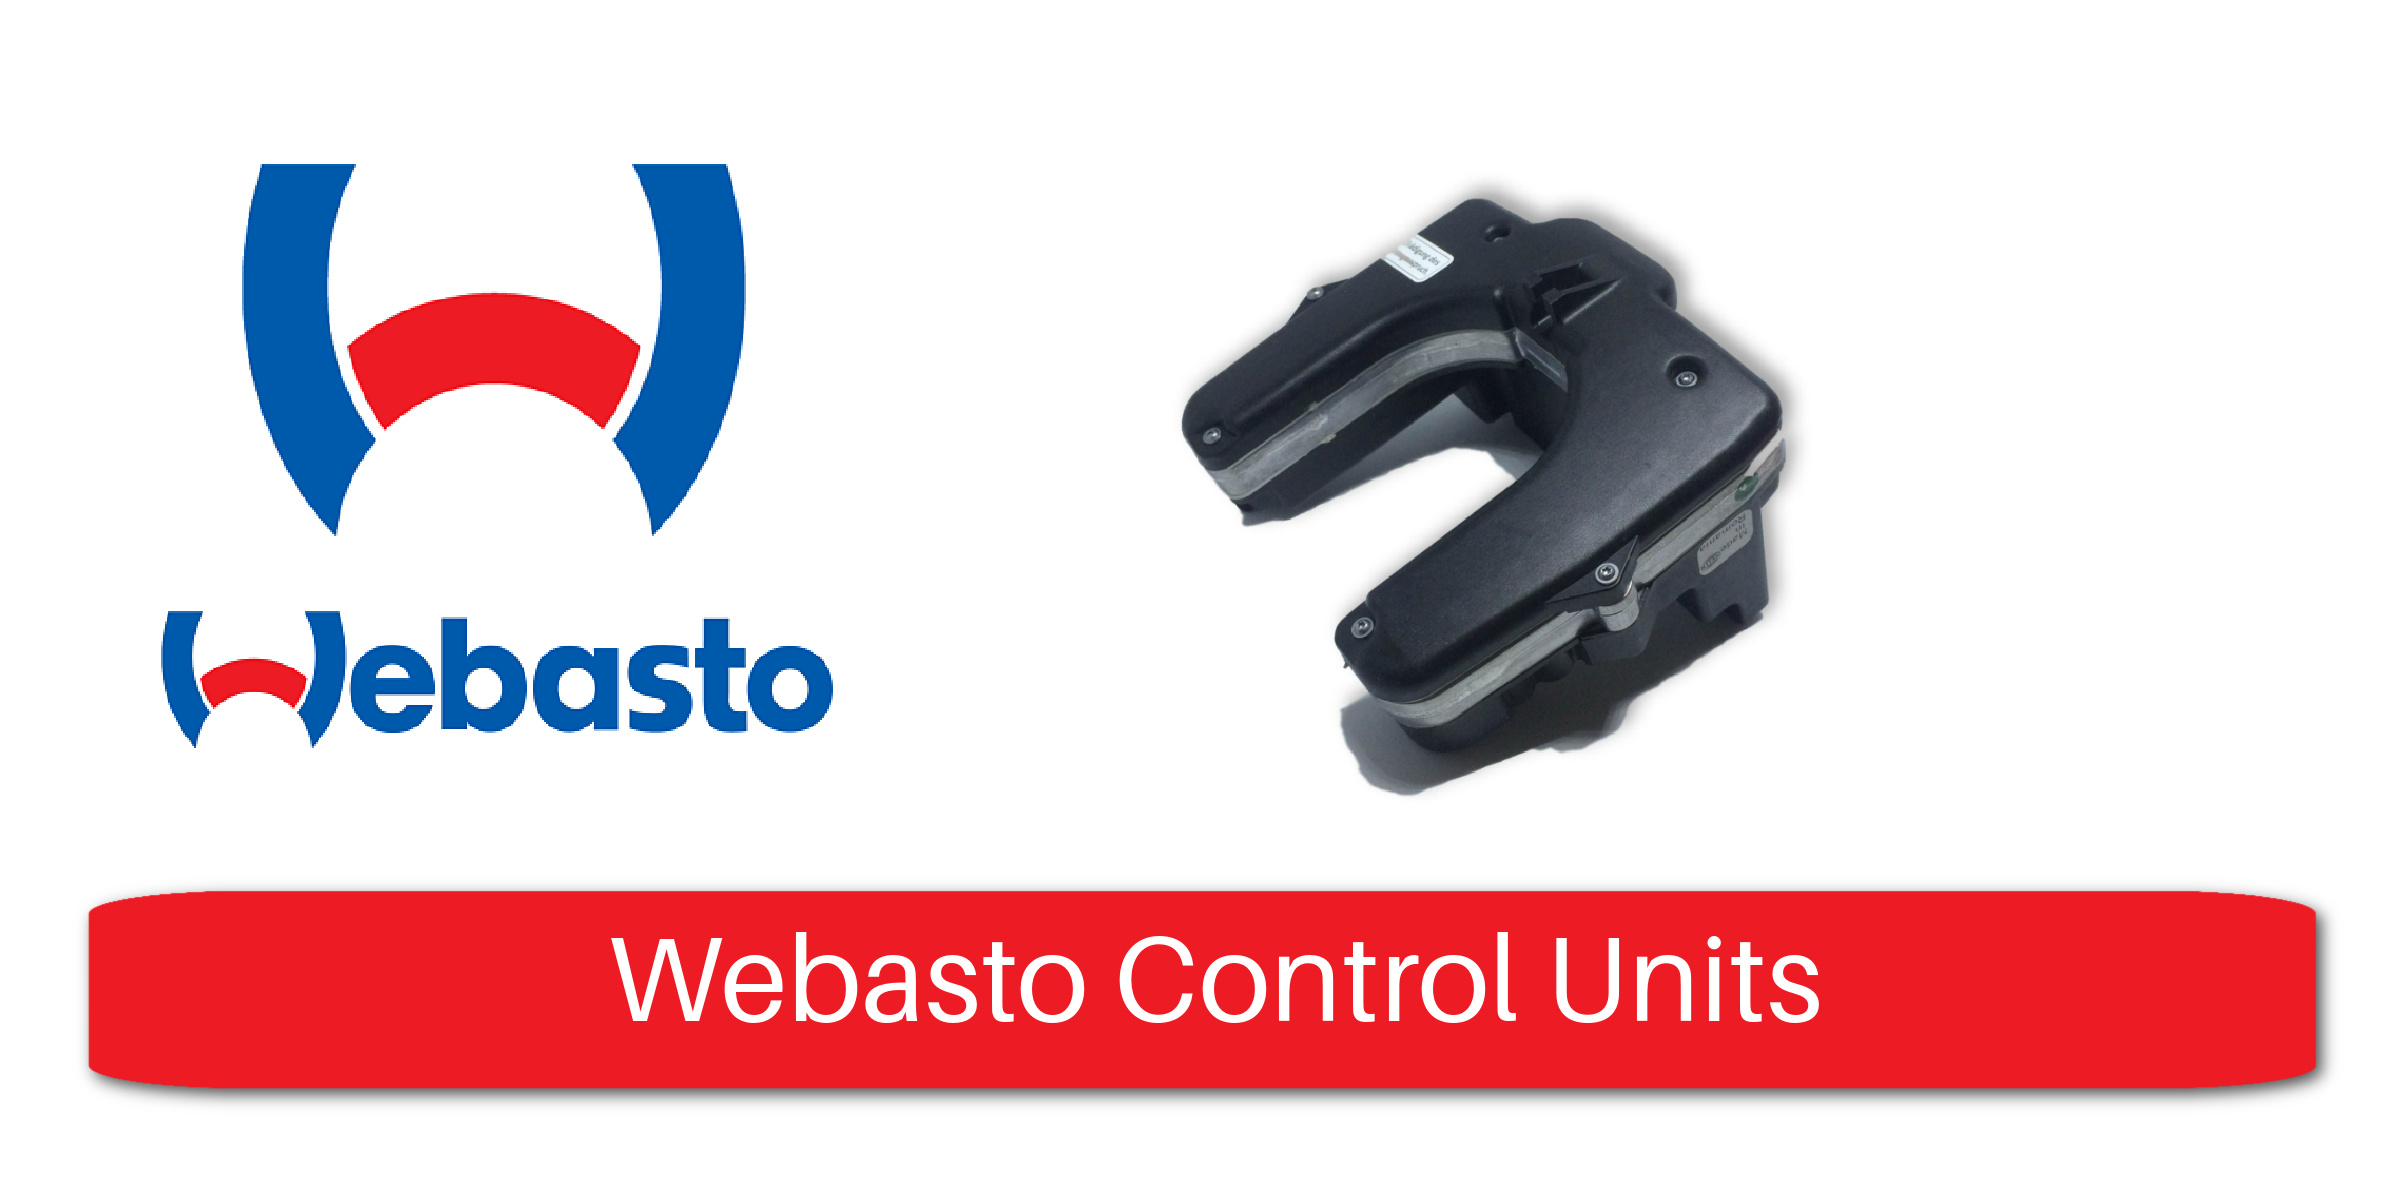 Webasto Control Units